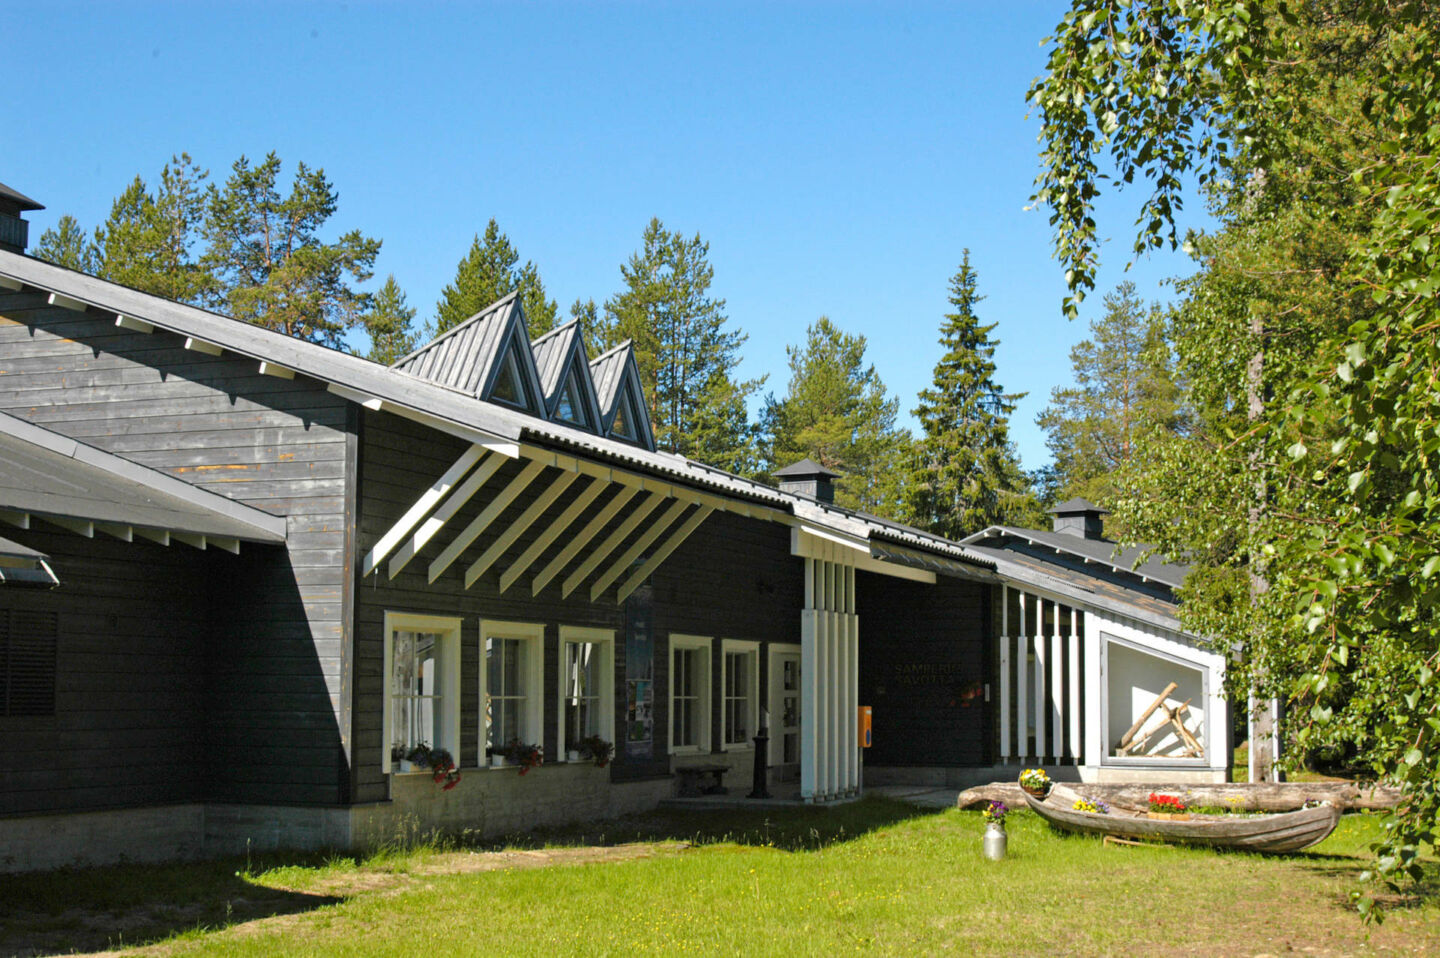 Samperin Savotta, accommodation and service provider, in Savukoski, Finland